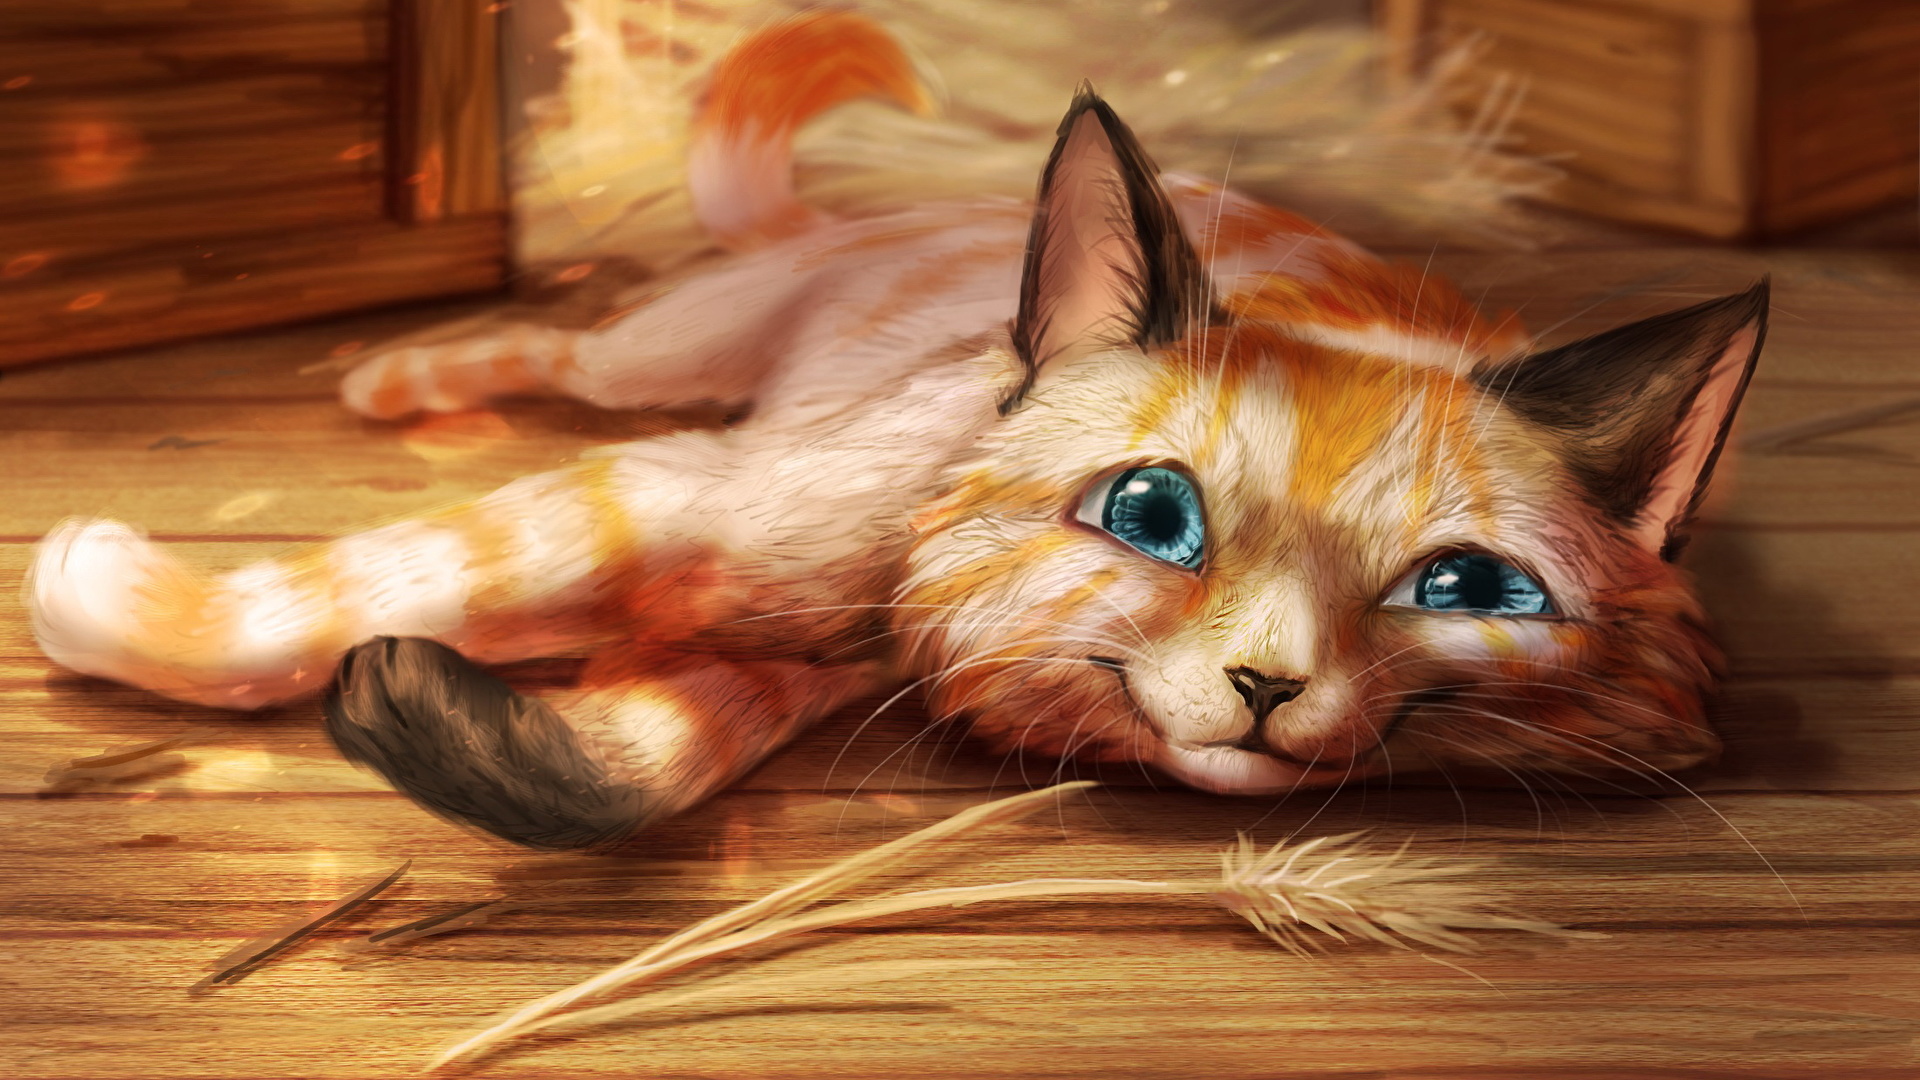 http://s1.1zoom.me/b5050/724/Cats_Painting_Art_498256_1920x1080.jpg